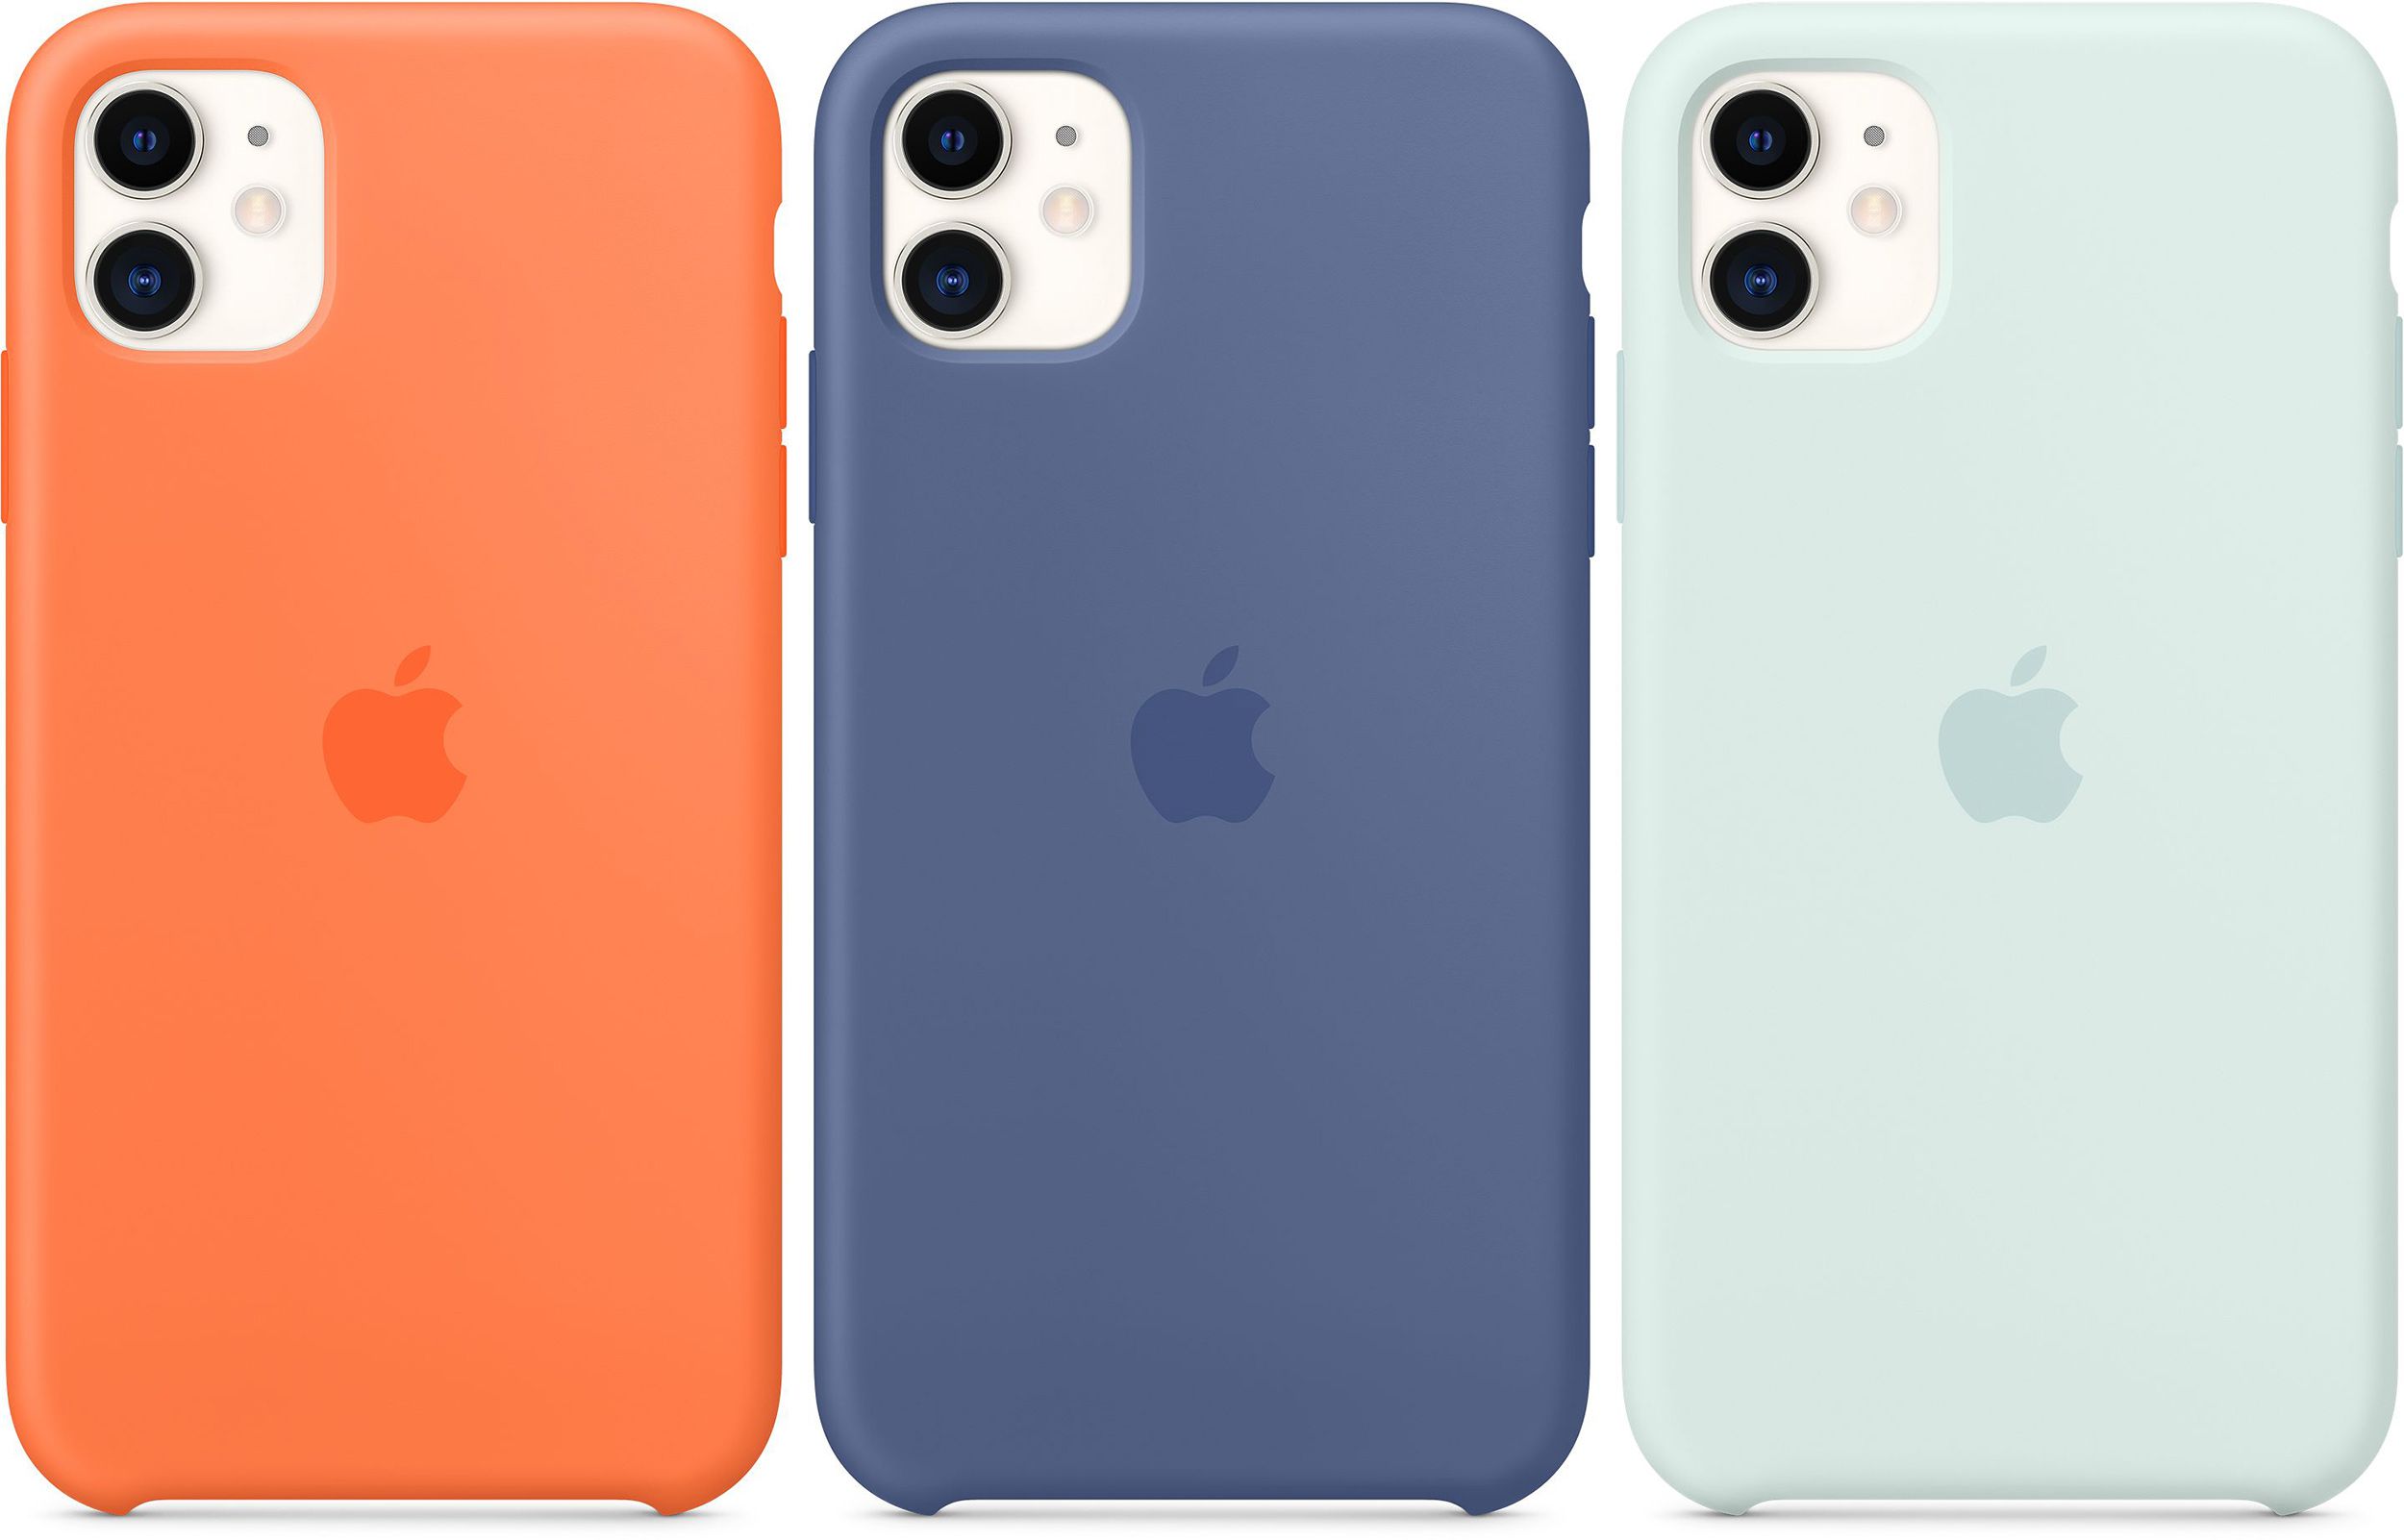 iPhone 11 Pro Max Silicone Case - Linen Blue - Apple